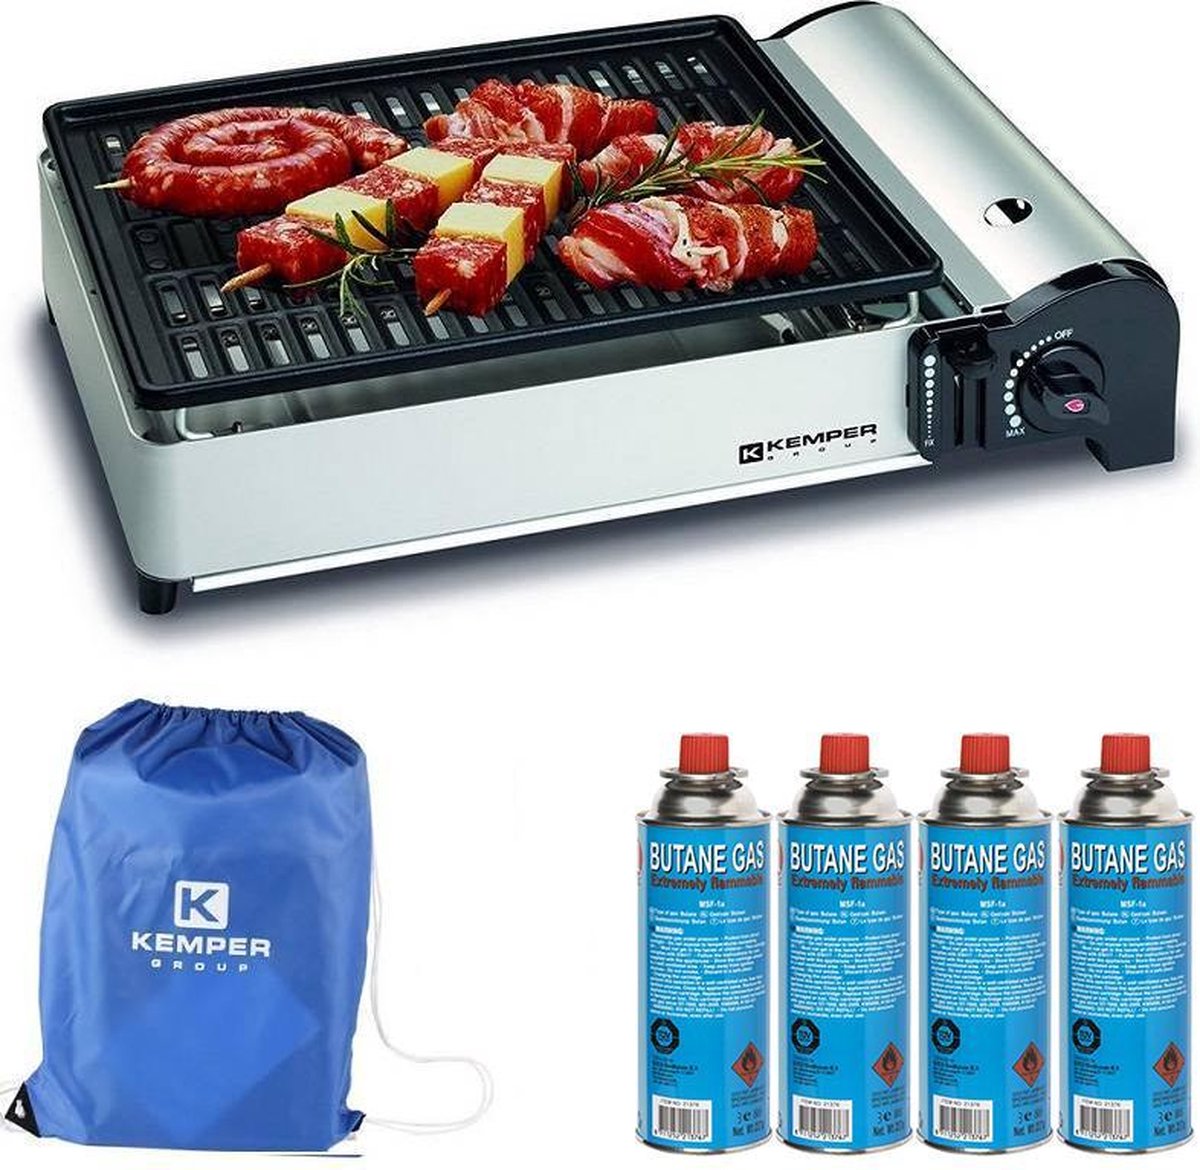 Kemper portable smart gas barbecue | Tafelbarbecue | Campingkooktoestel | 4 gasflessen